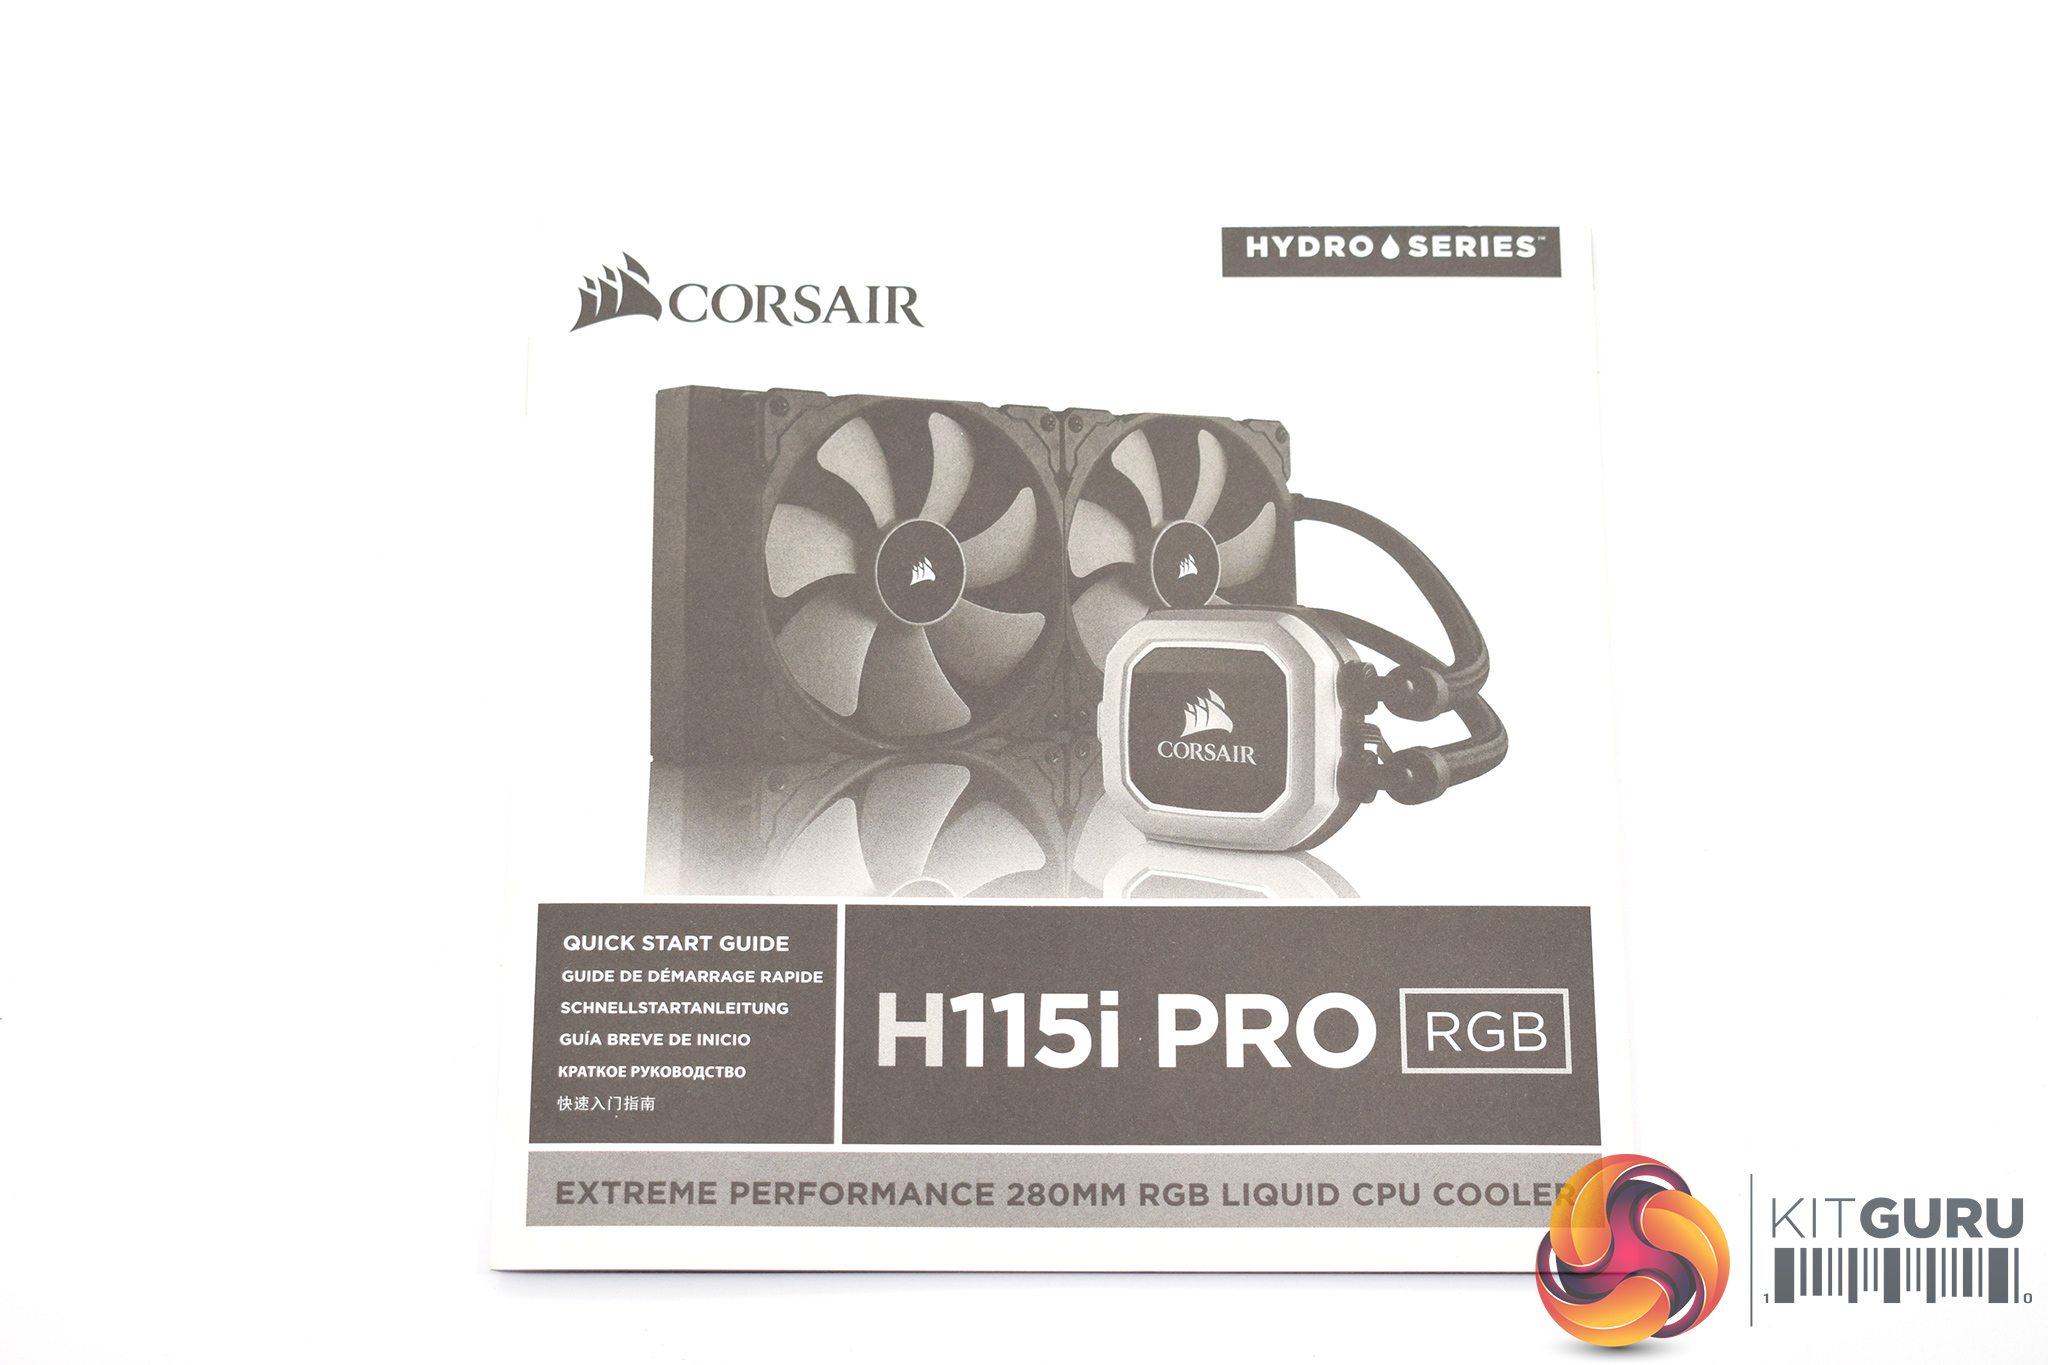 Forbedring handicap sikkerhed Corsair H115i Pro RGB (280mm AIO) Liquid Cooler Review | KitGuru- Part 2